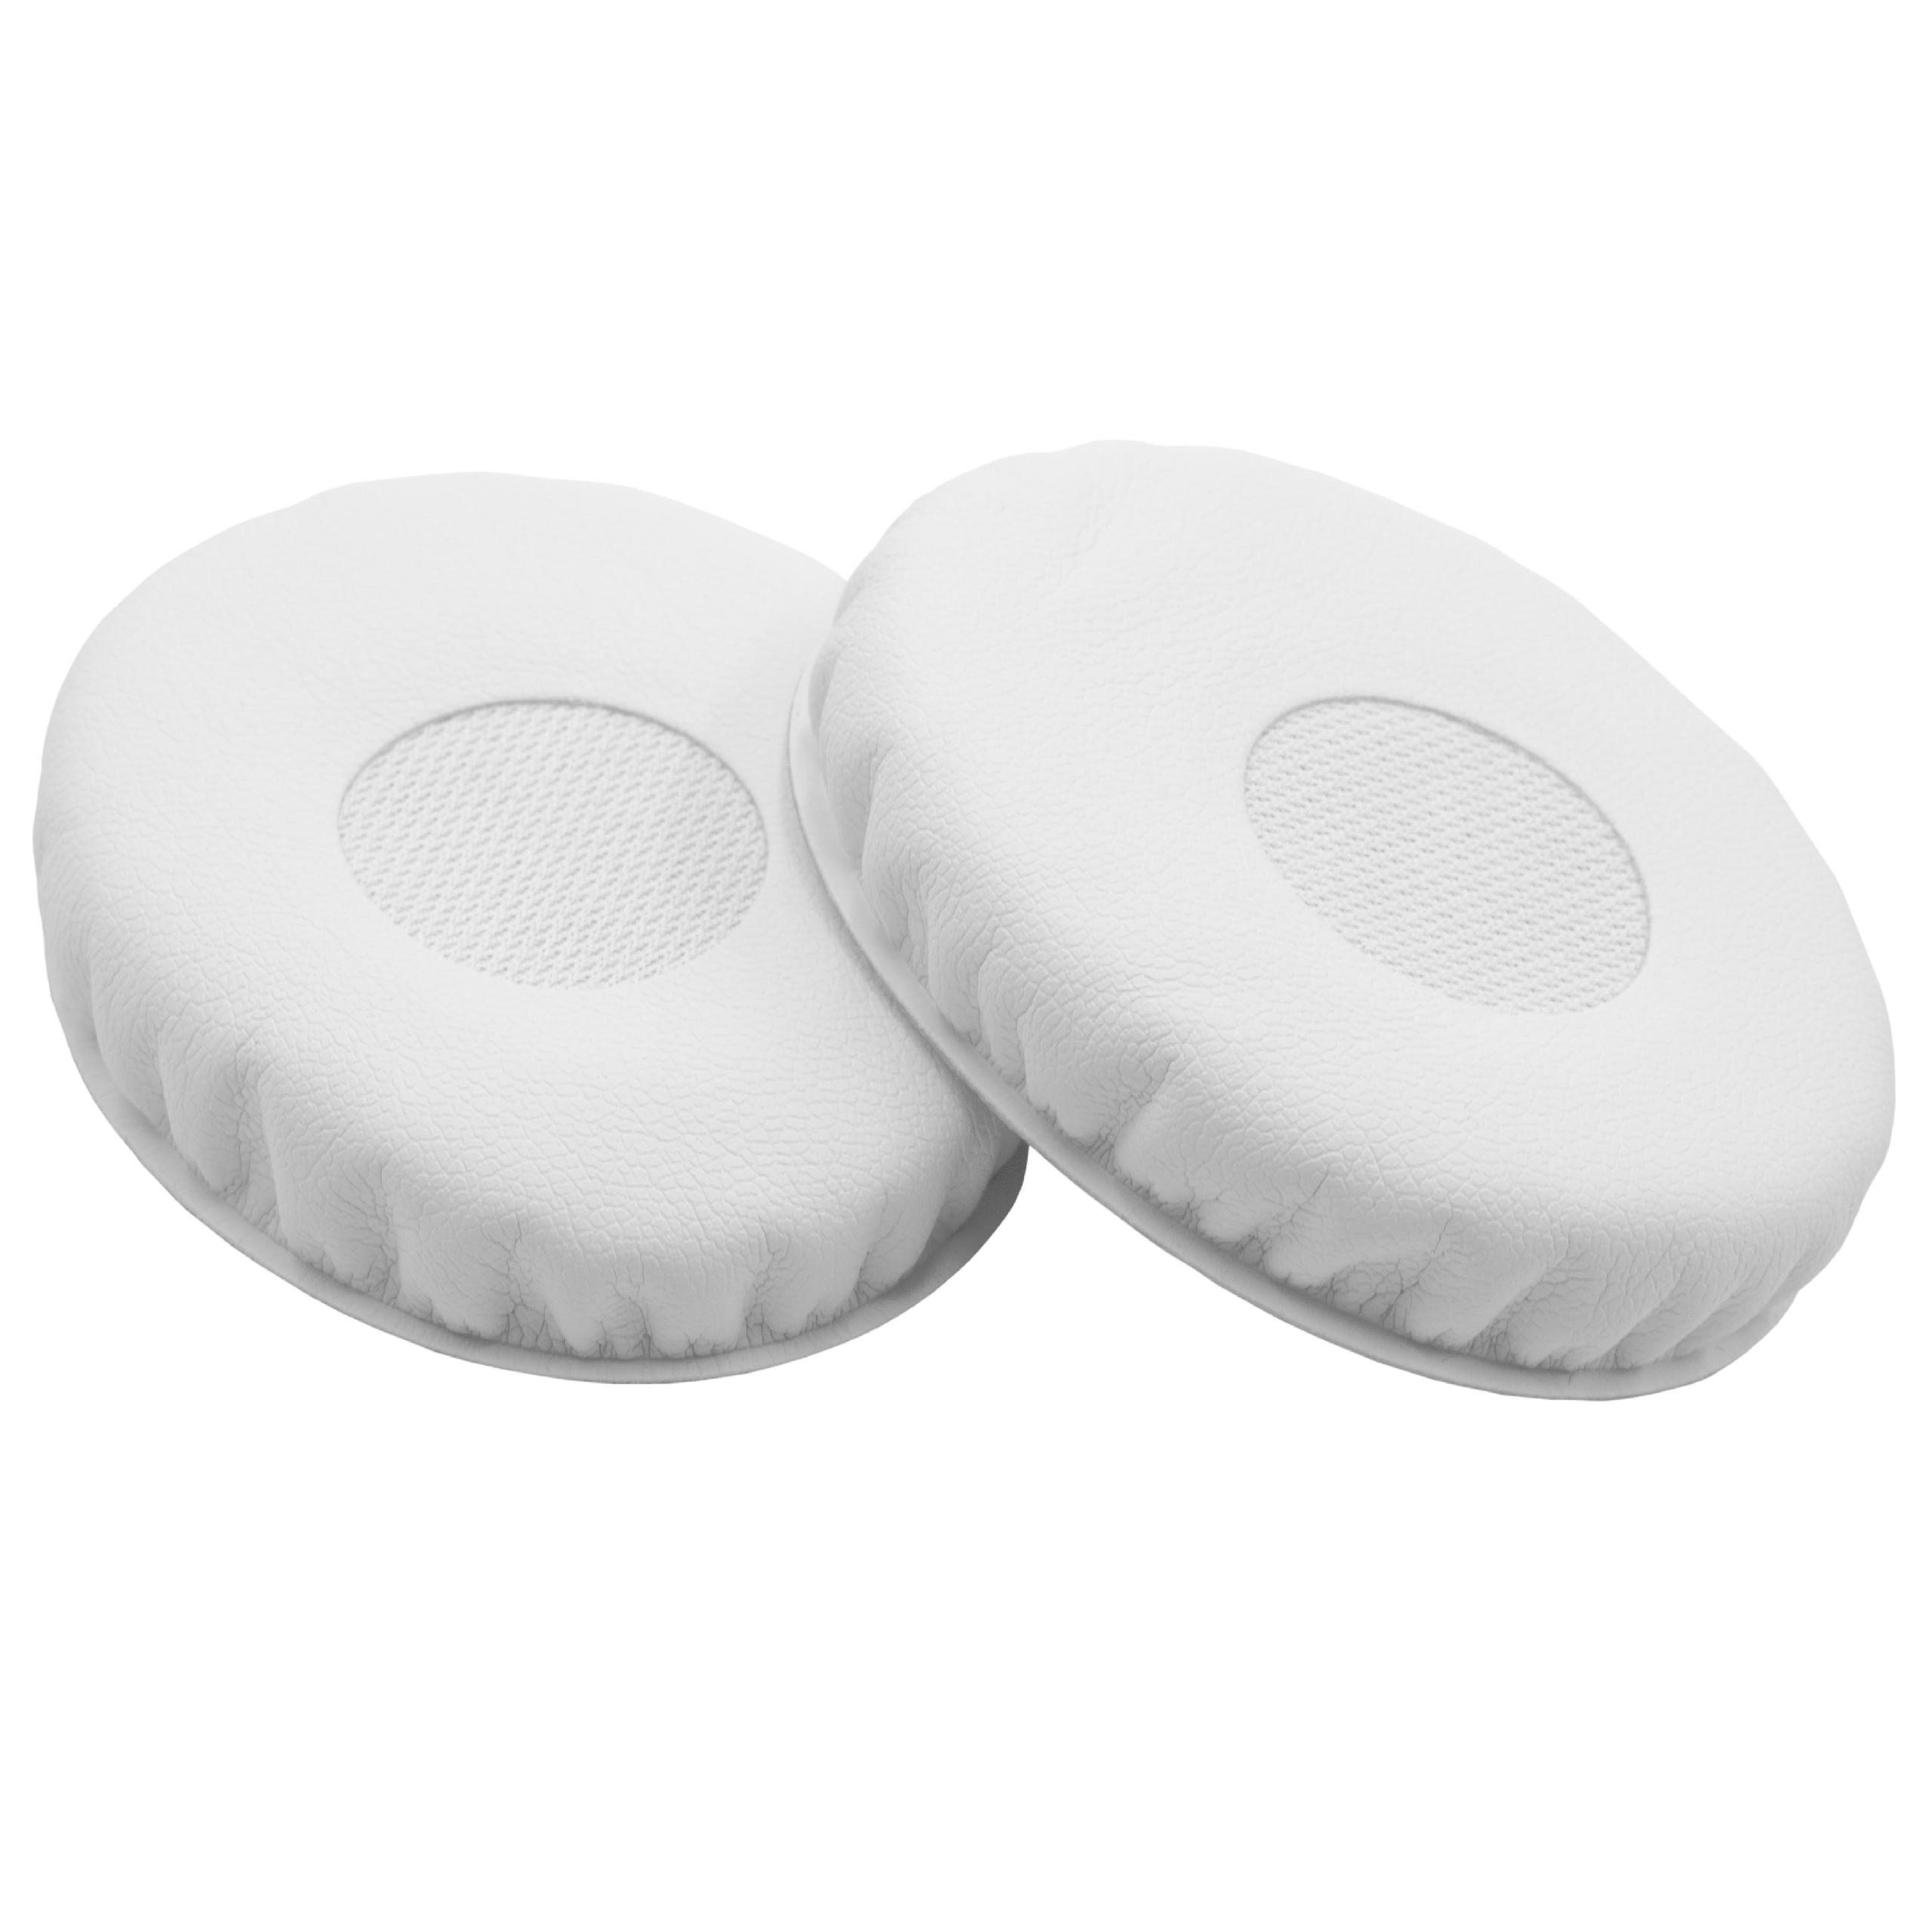 Ear Pads suitable for Sennheiser HD218 Headphones etc. - polyurethane / foam, 11 mm thick